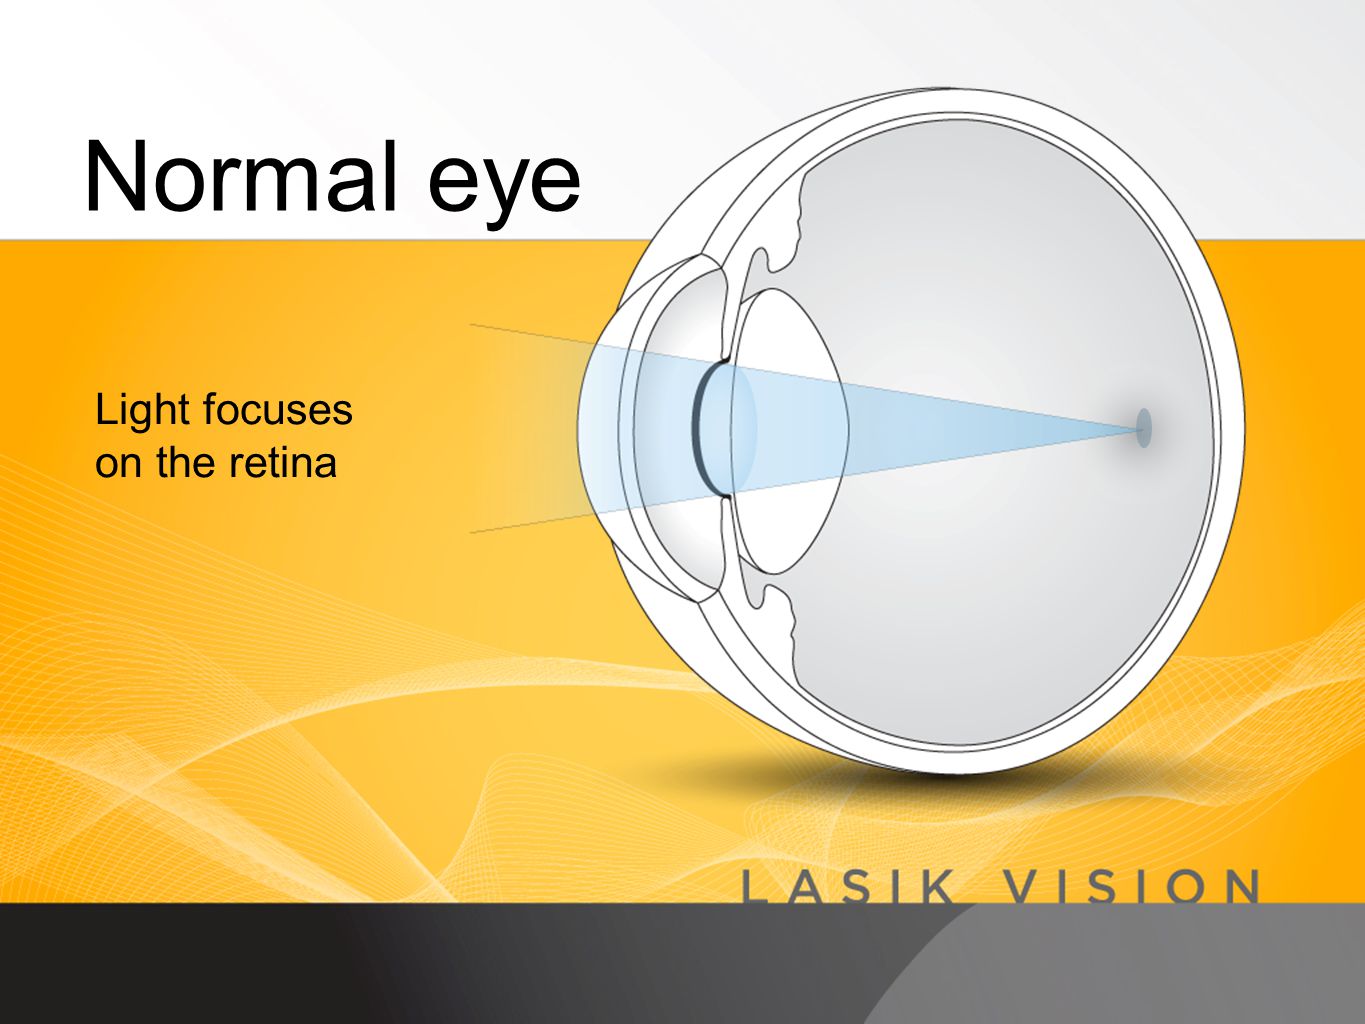 Normal eye Light focuses on the retina